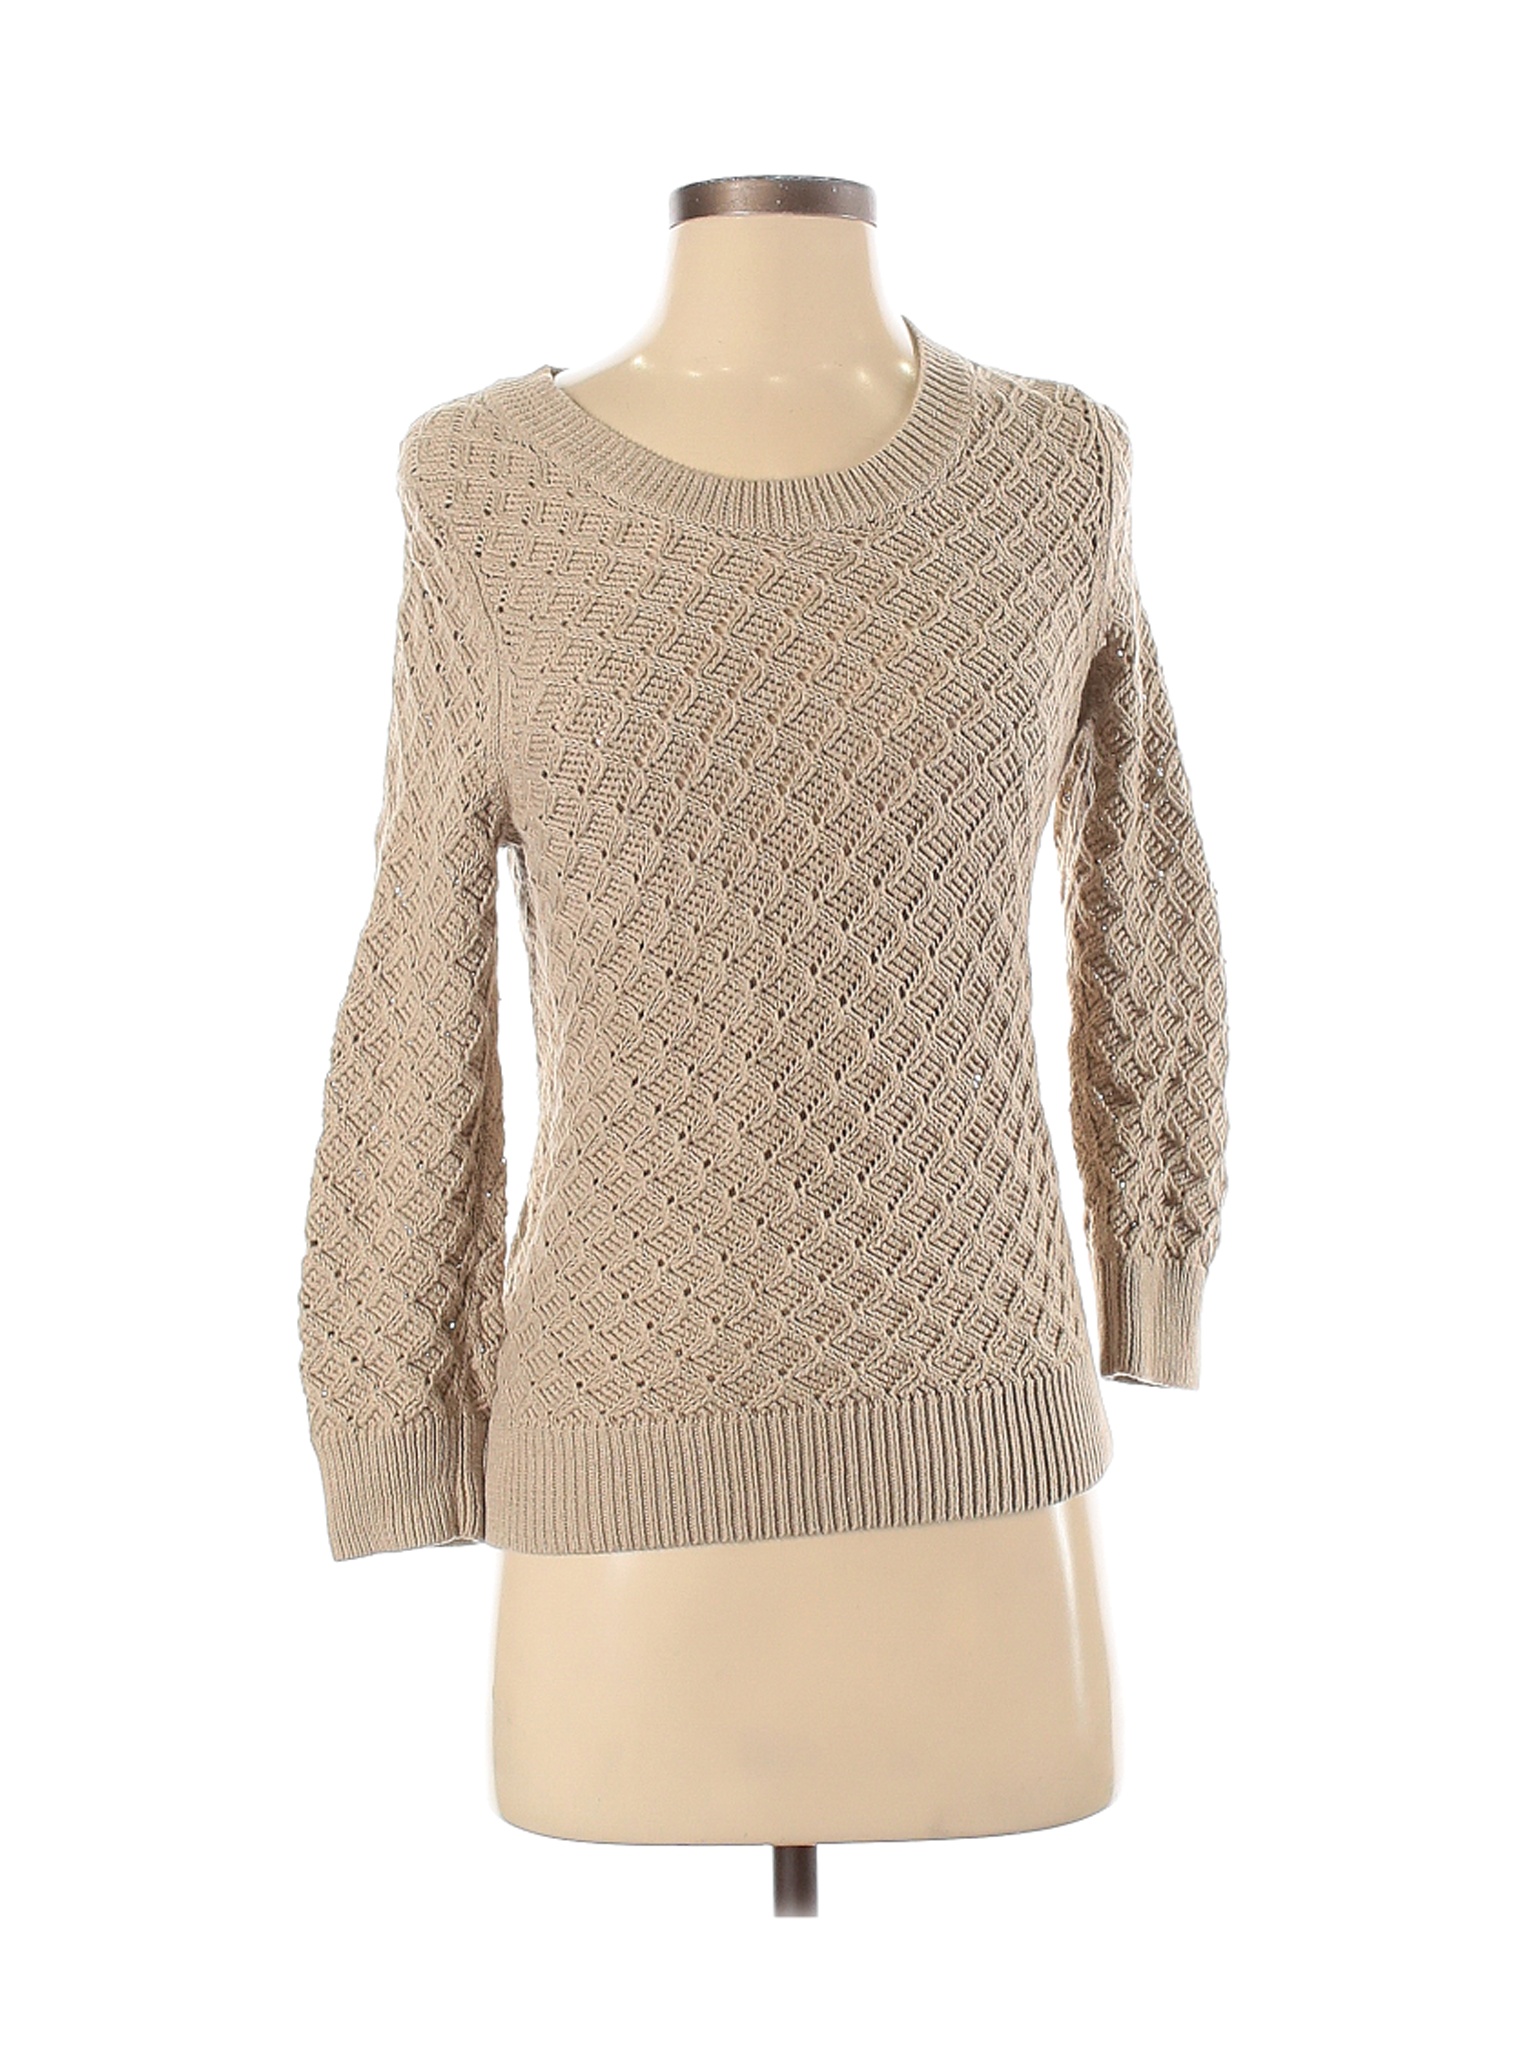 Banana Republic Women Brown Pullover Sweater M | eBay